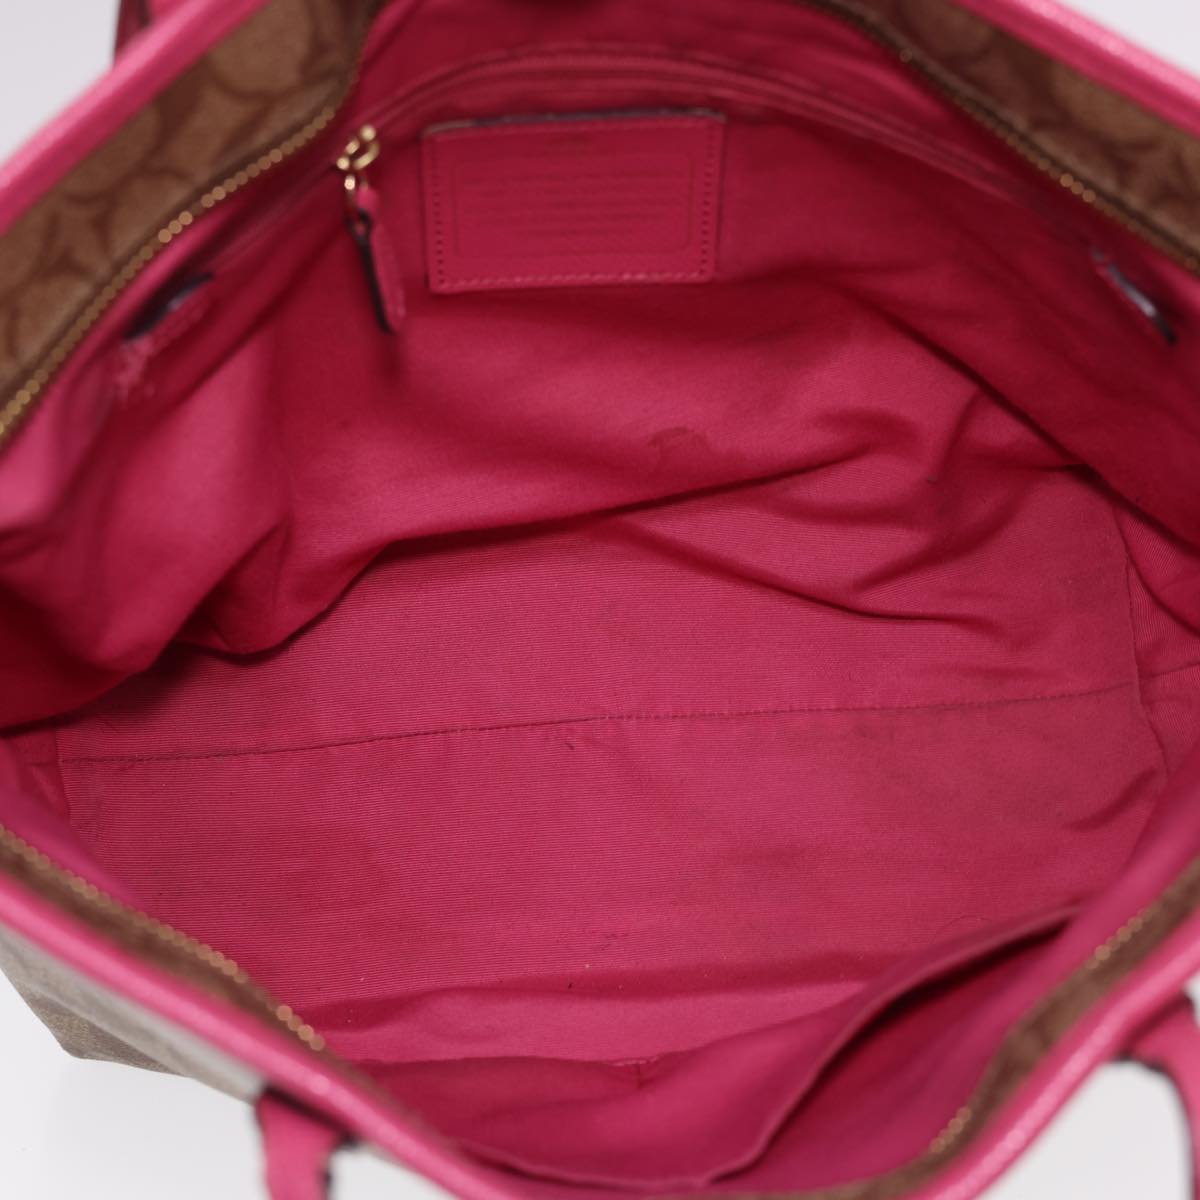 Coach Signature Shoulder Bag Canvas Leather 3Set Black Brown pink